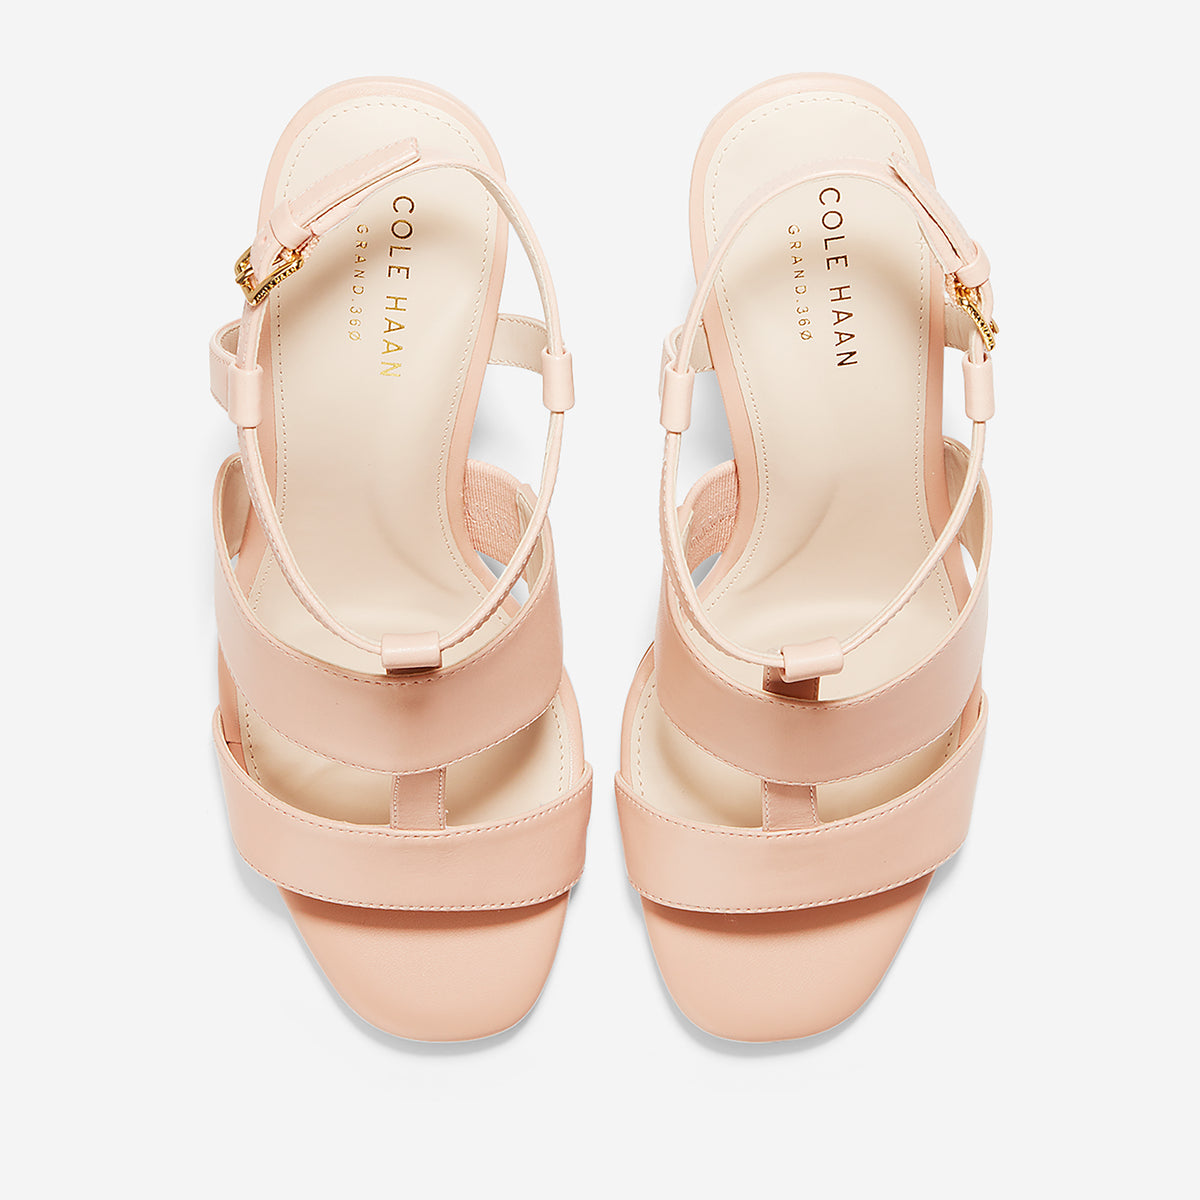 ColeHaan-Cherie Grand Block Heel Sandal (85mm)-w13609-Mahogany Rose Leather